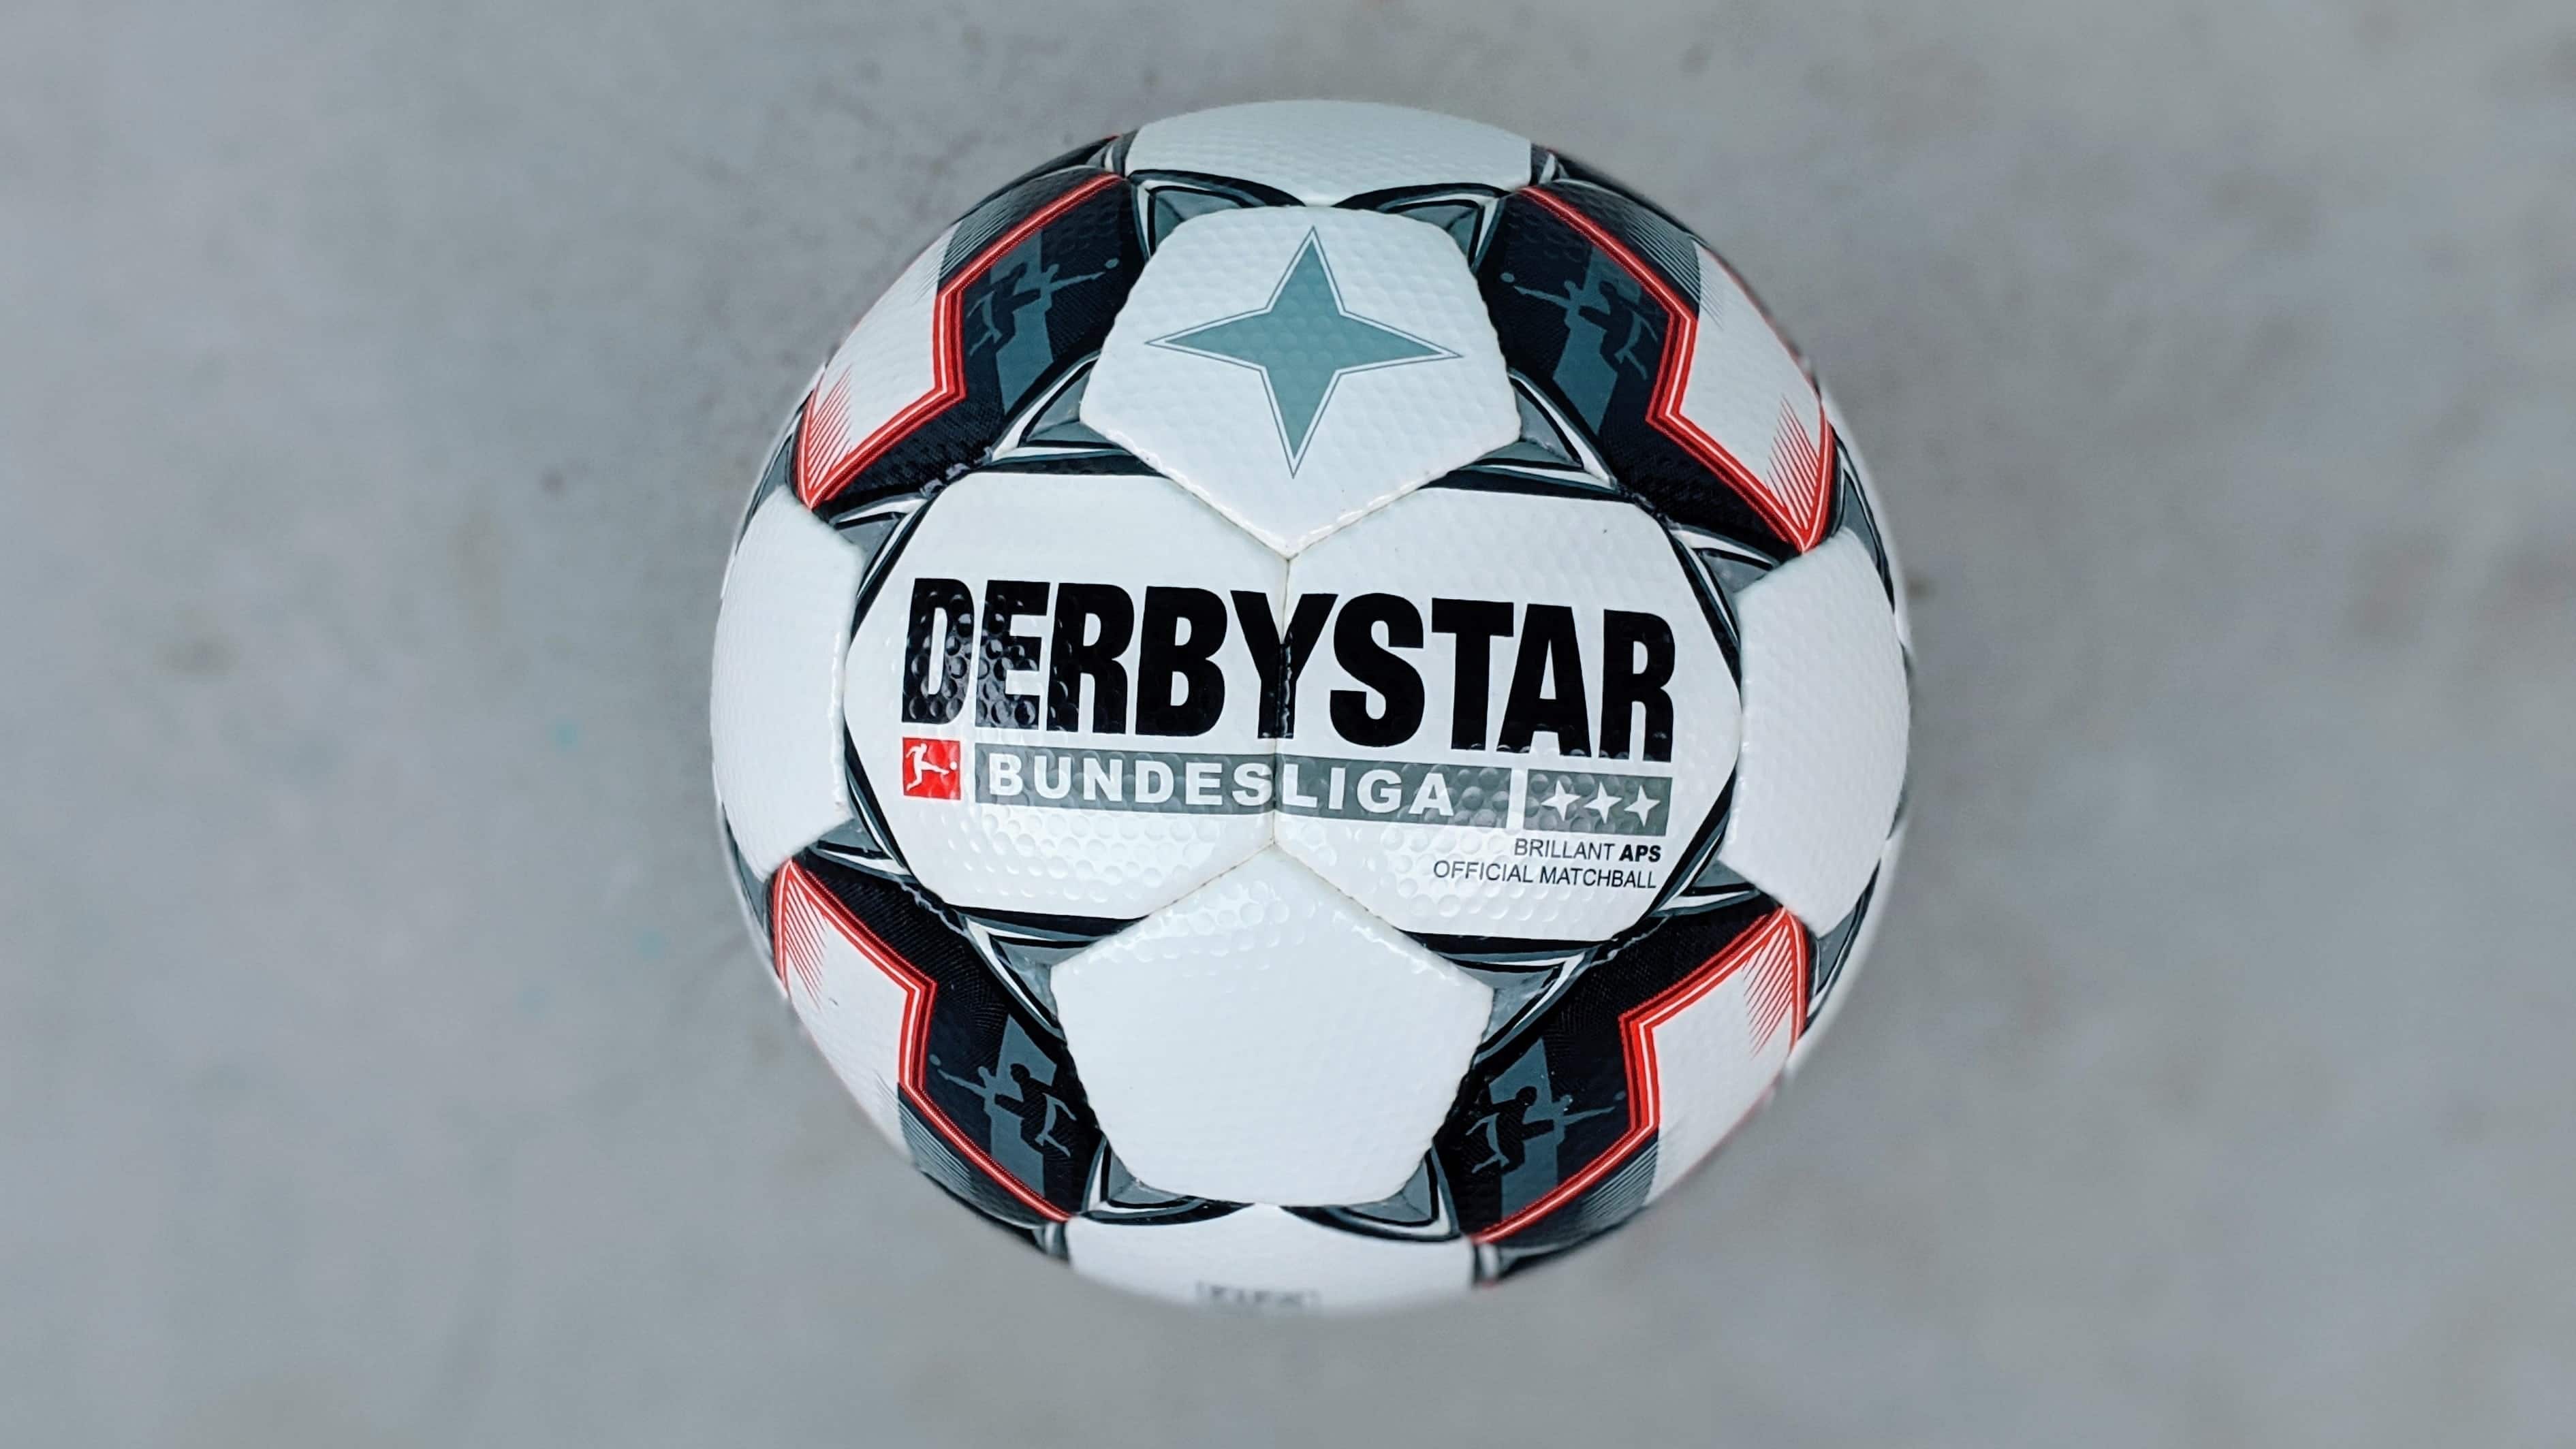 Derbystar Fußball BUNDESLIGA BRILLANT APS Official Matchball 2019/20 Größe 5 